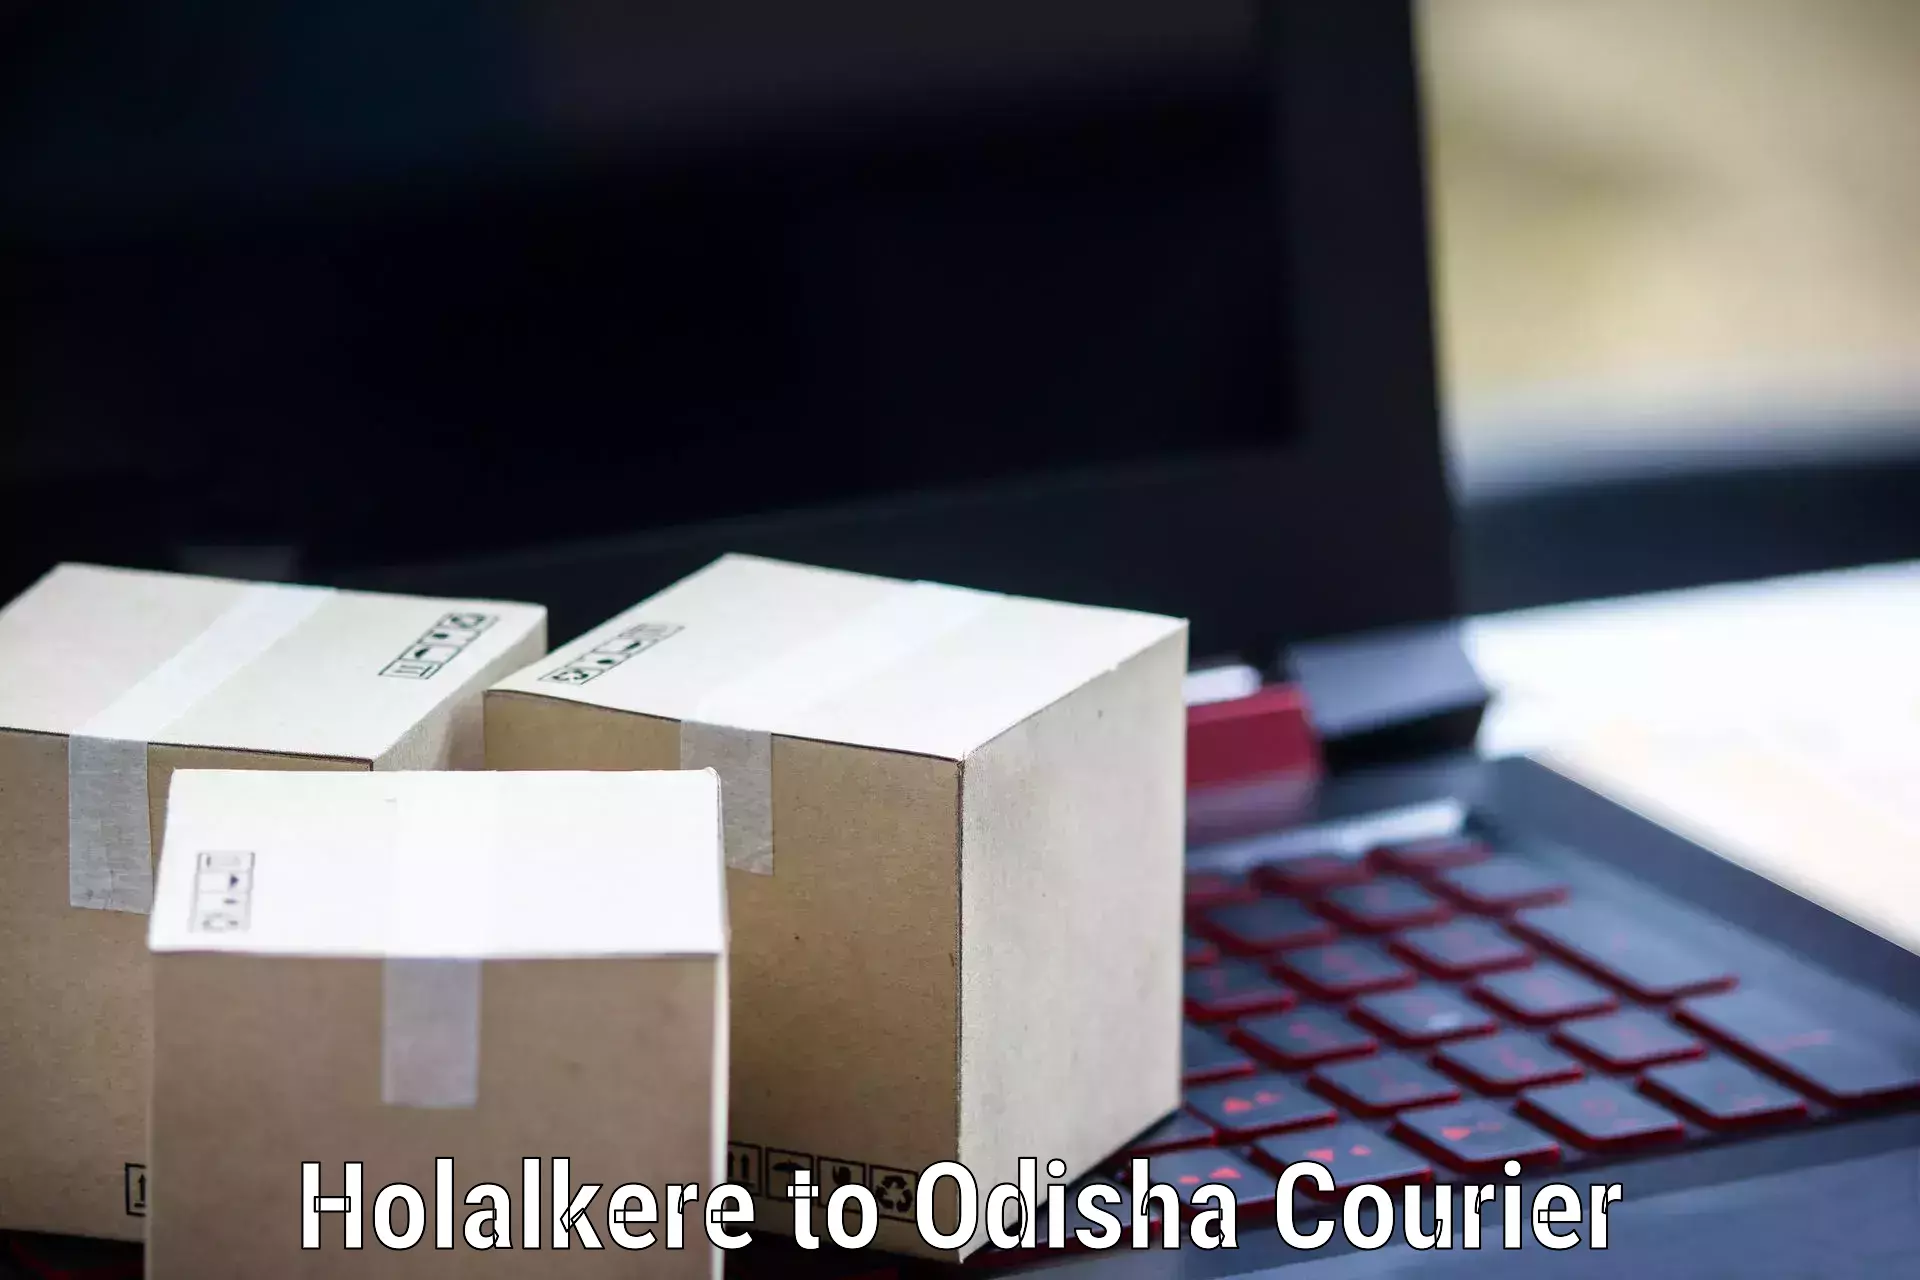 Courier service comparison Holalkere to Subdega